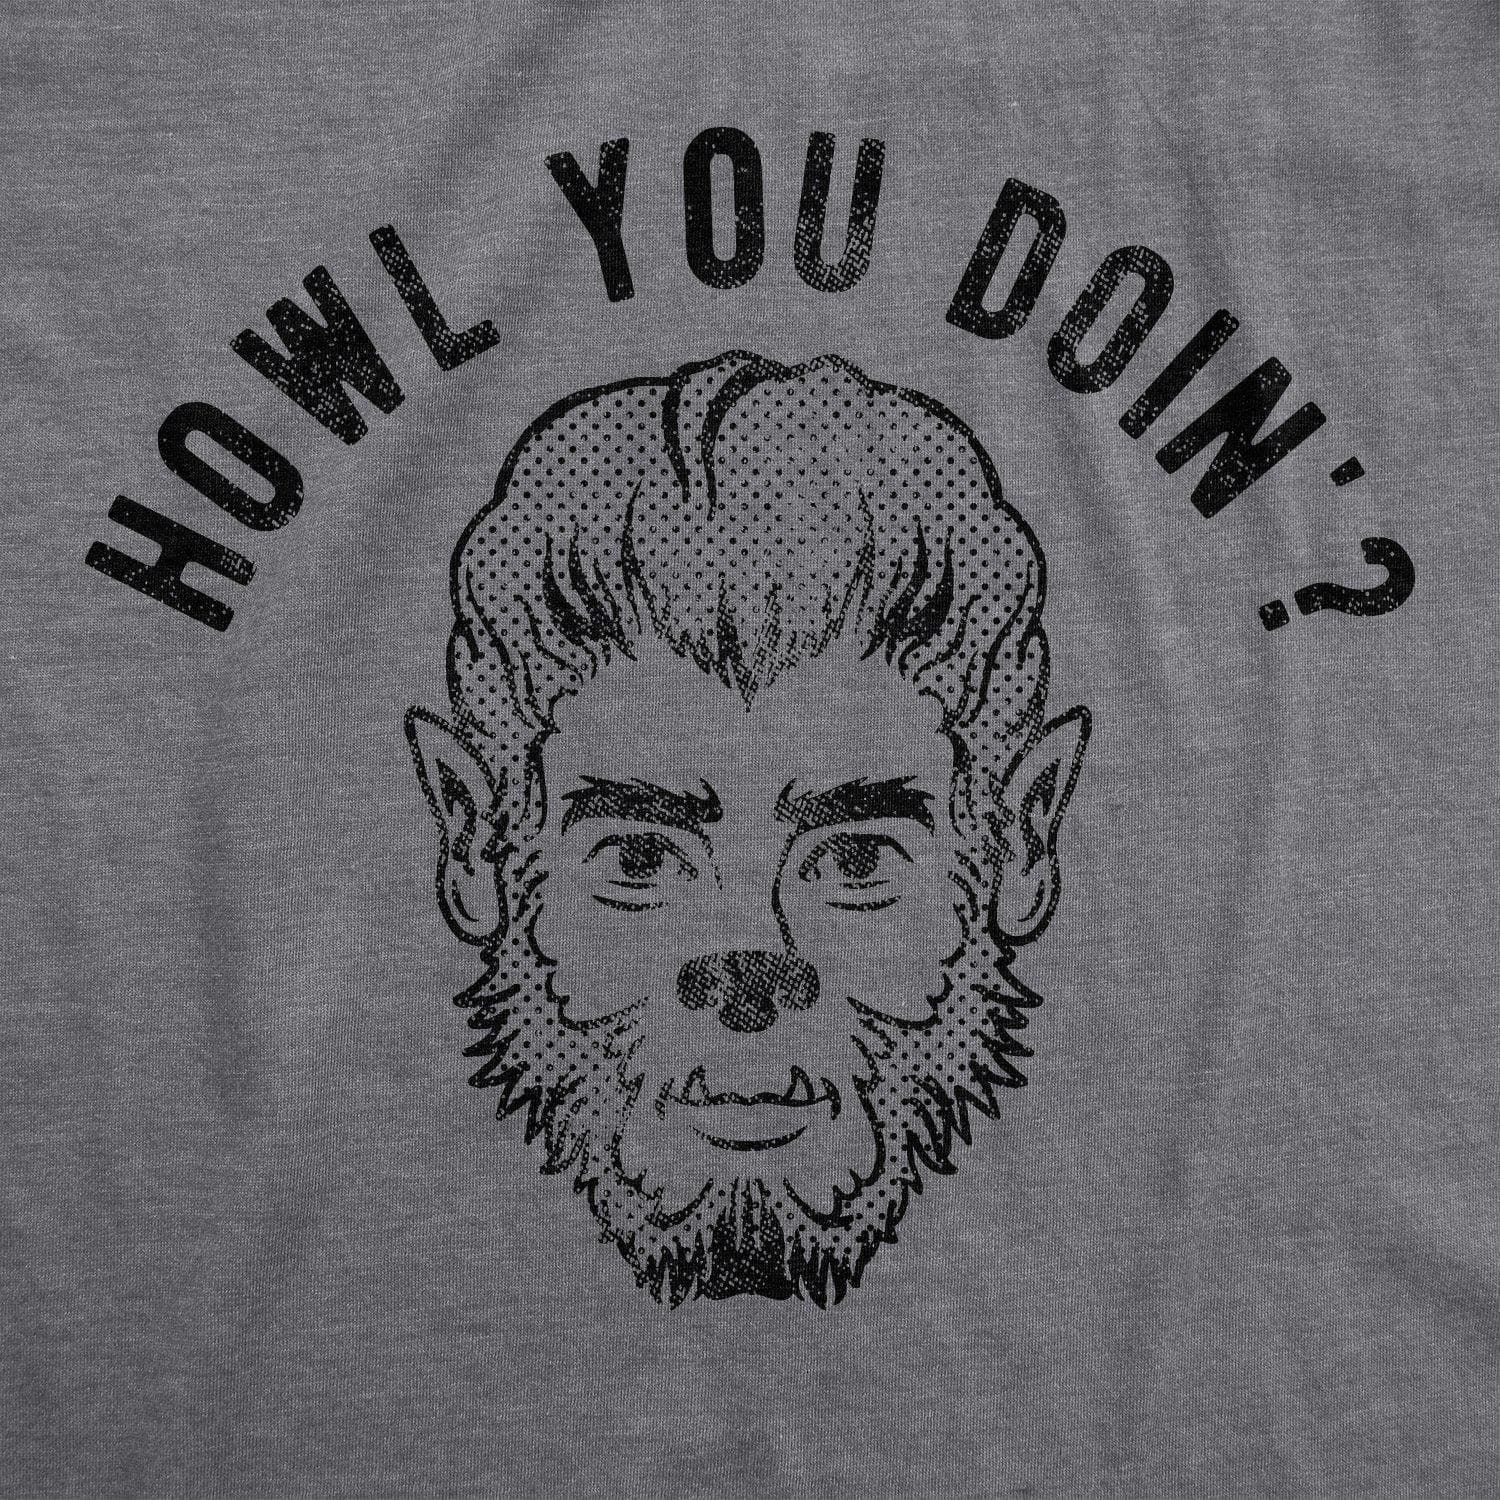 Howl You Doin' Men's Tshirt - Crazy Dog T-Shirts